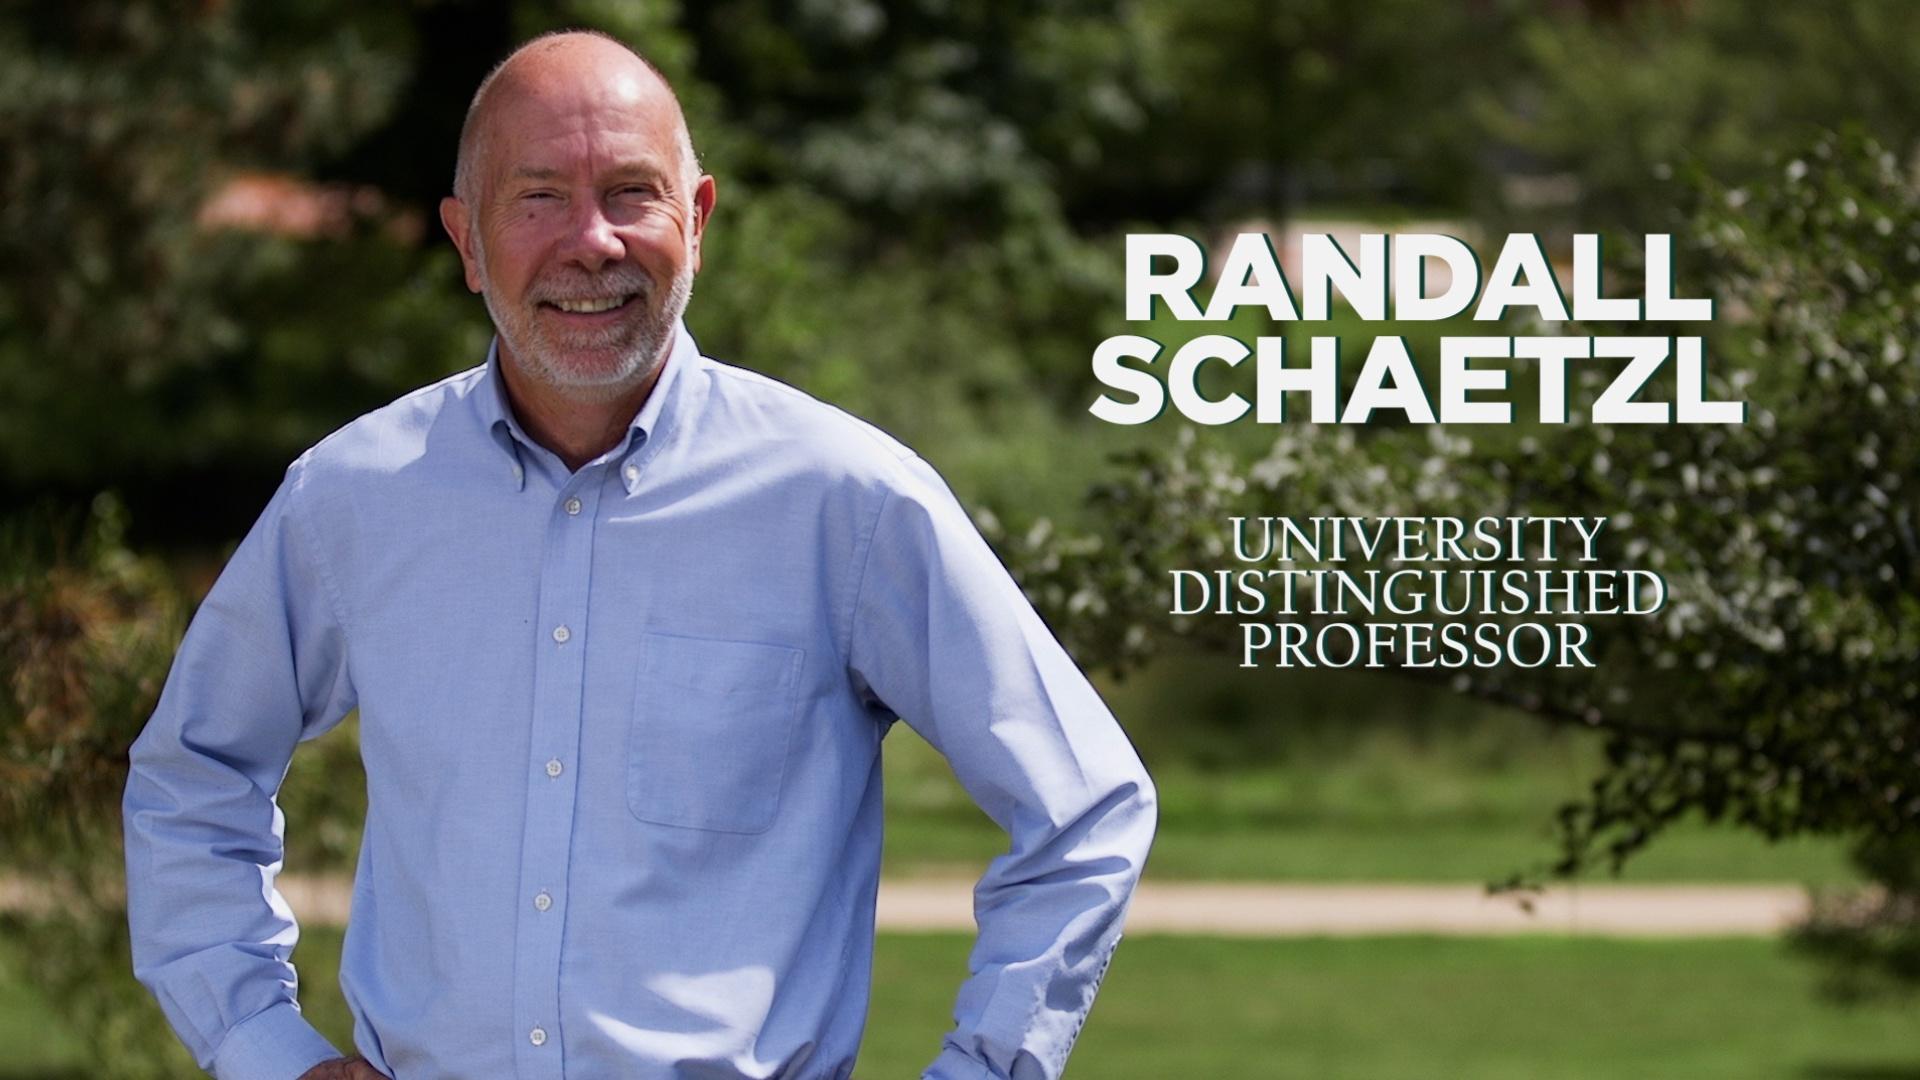 Randall Schaetzl|University Distinguished Professor